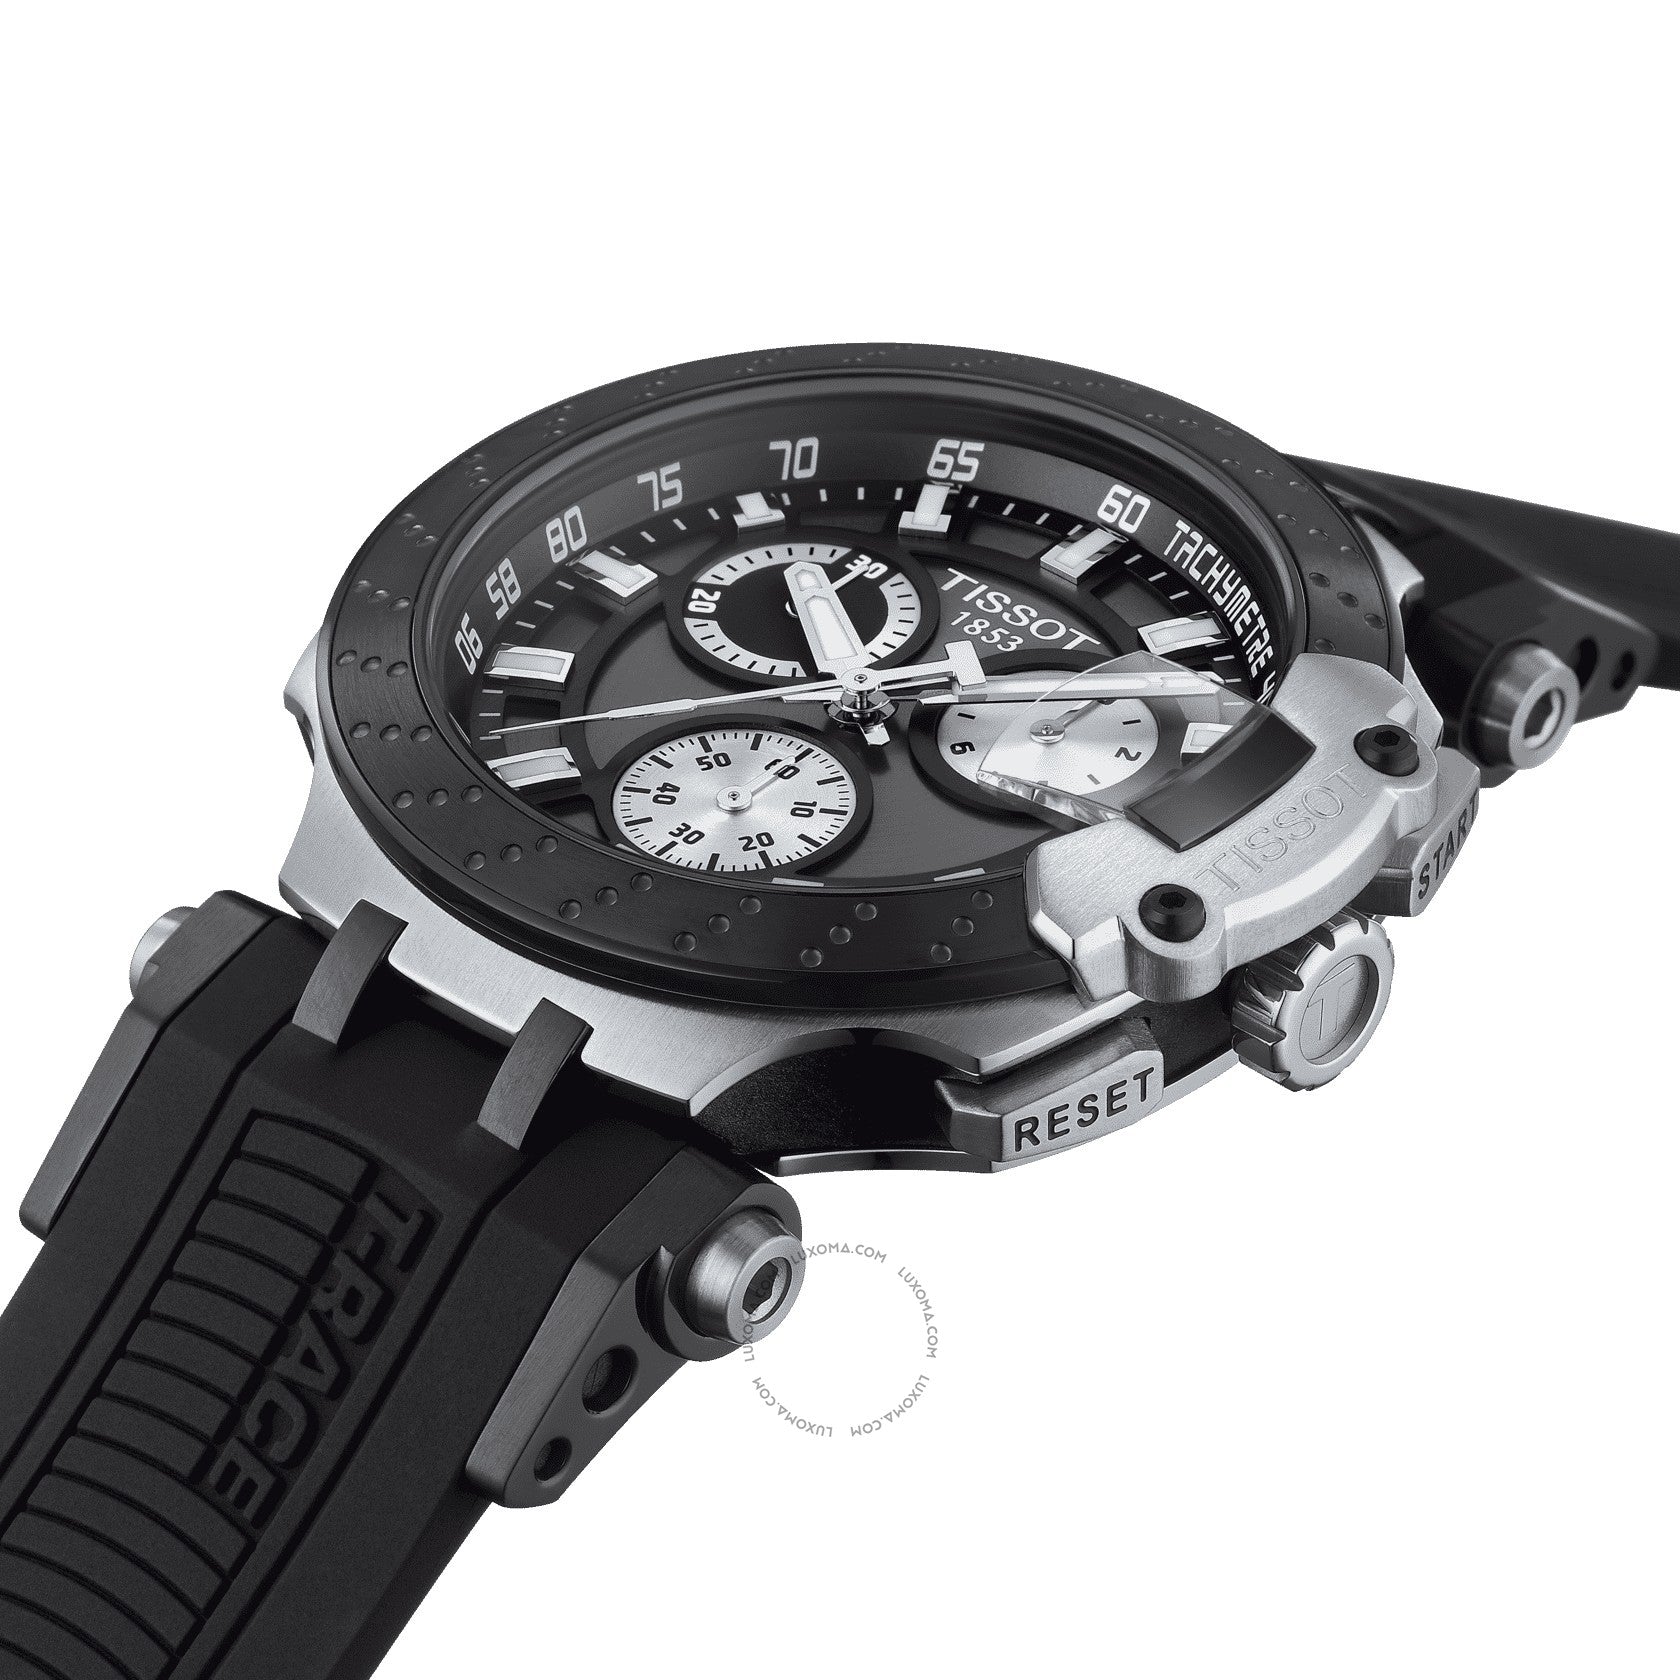 Tissot Tissot T-Race Chronograph Black Dial Men's Watch T115.417.27.061.00